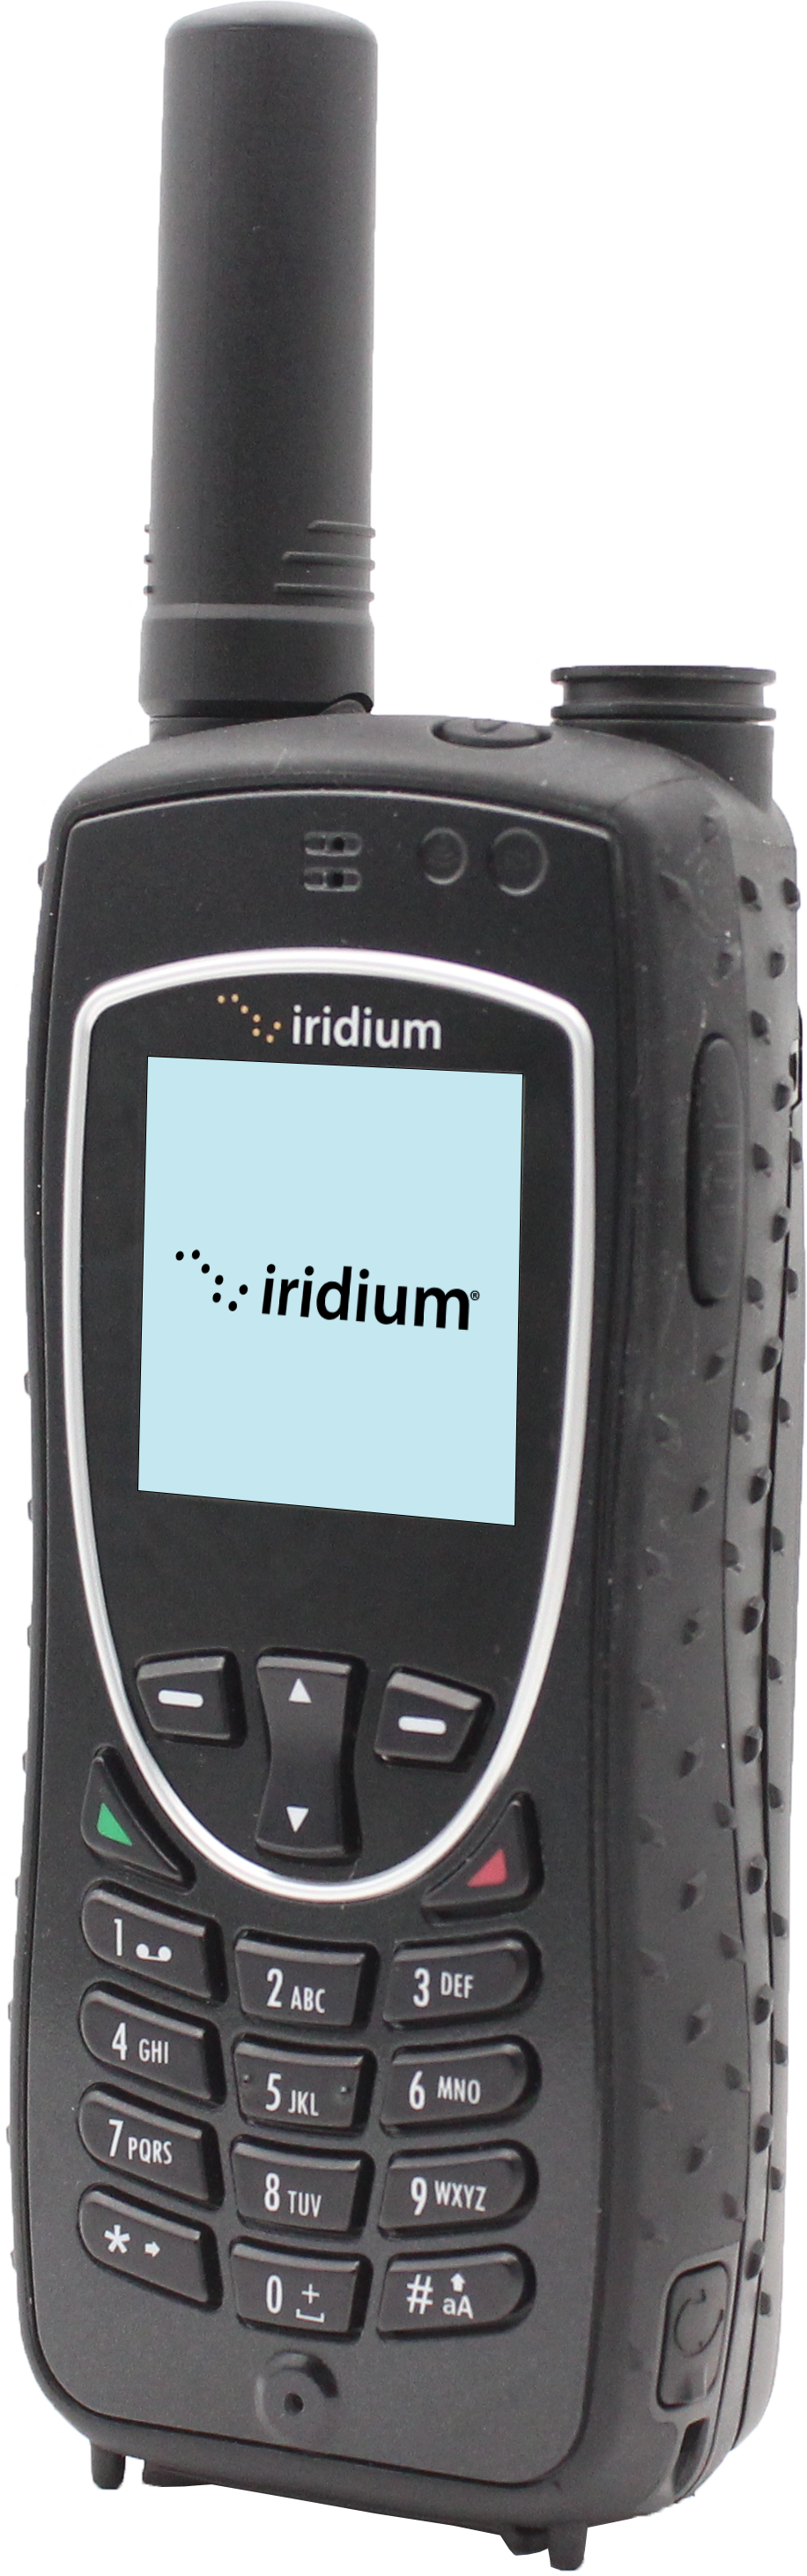 Iridium 9575 Extreme + 200 MIN SUDAMÉRICA